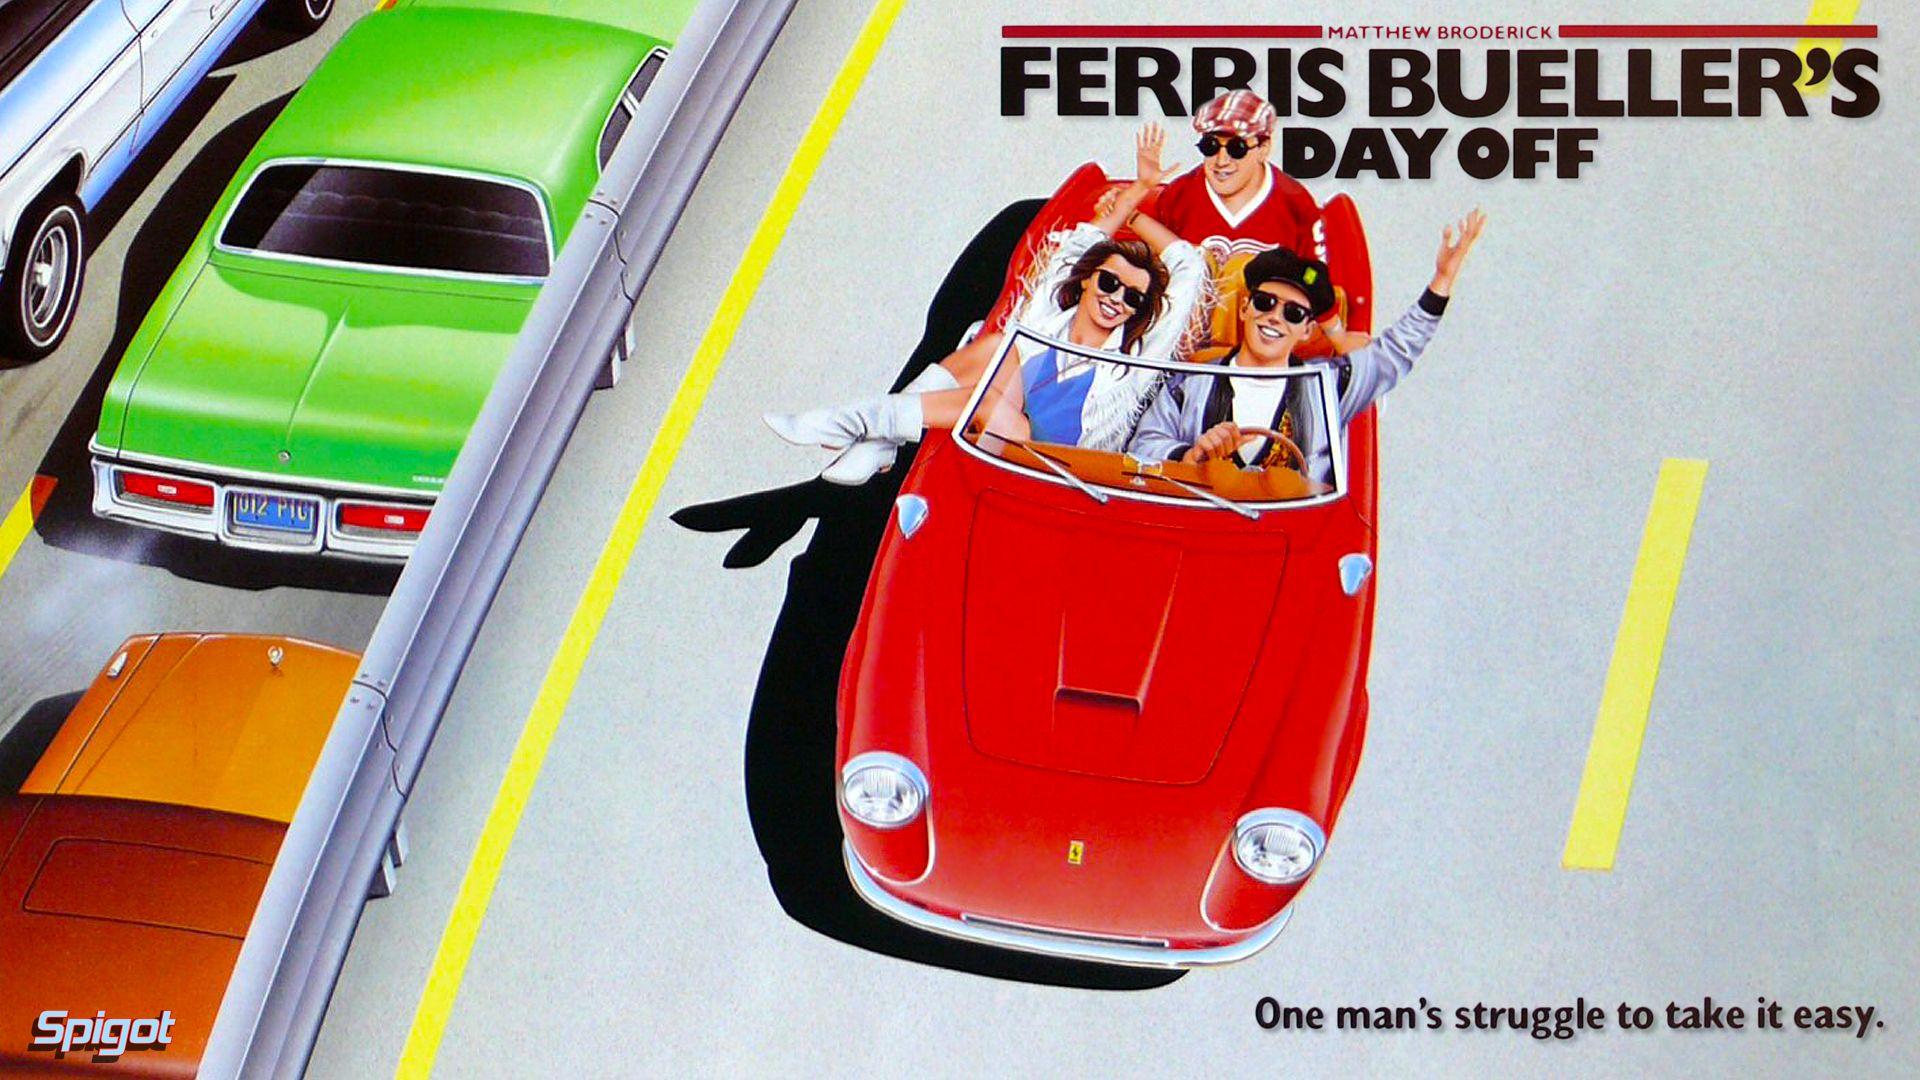 Ferris Bueller's Day Off. George Spigot's Blog